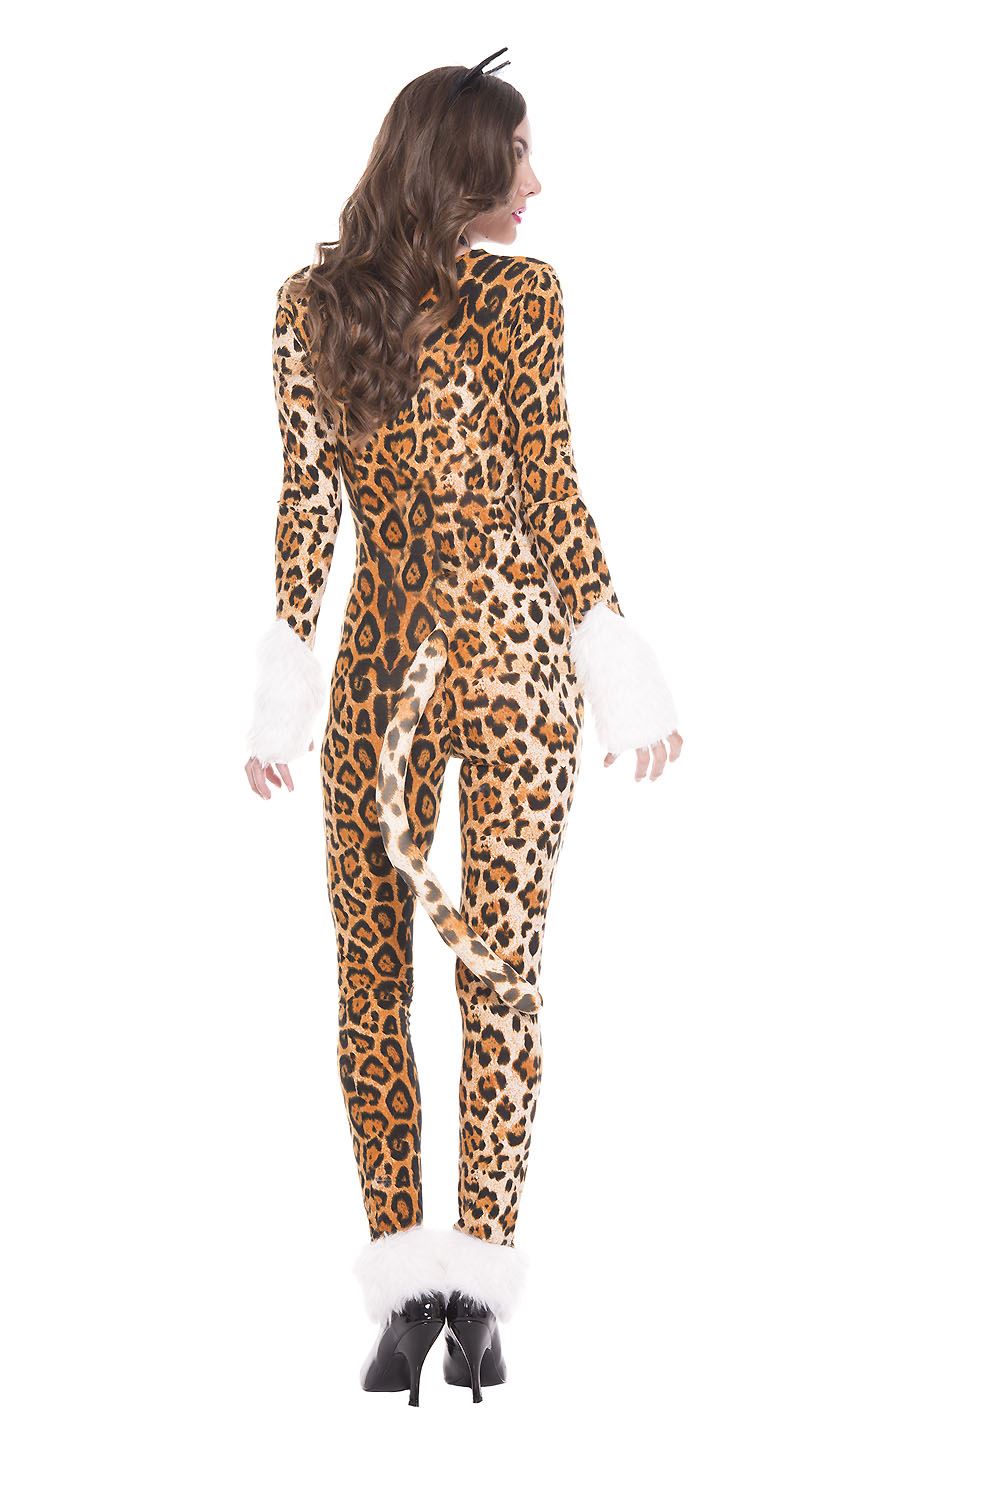 Adult Furry Feline Woman Costume | $60.99 | The Costume Land